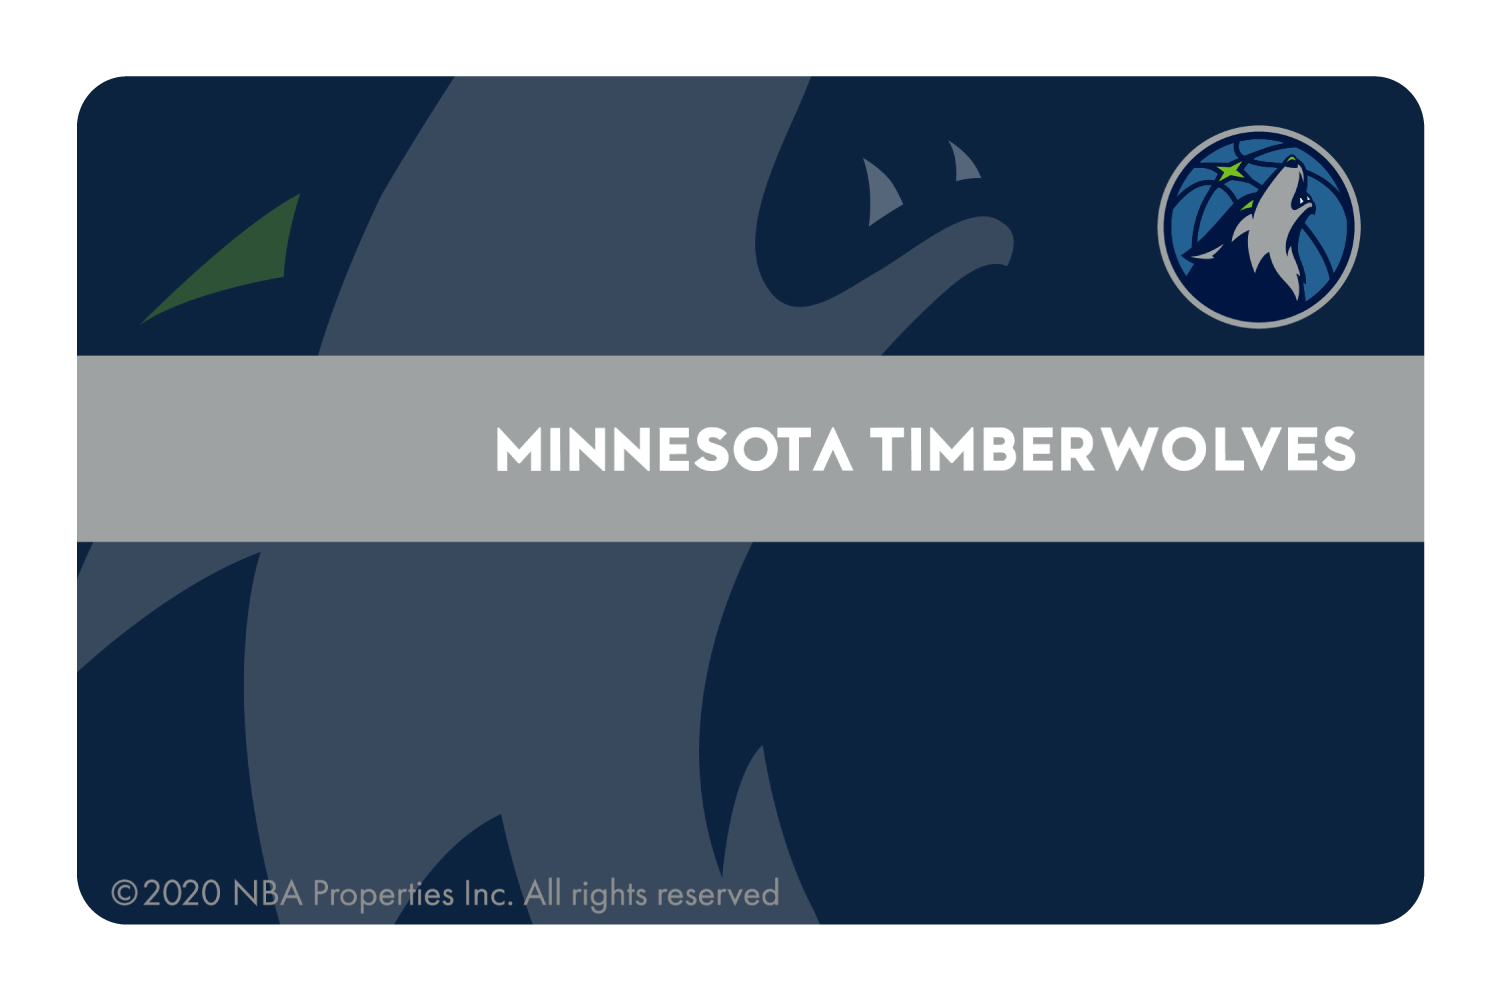 Minnesota Timberwolves: Midcourt